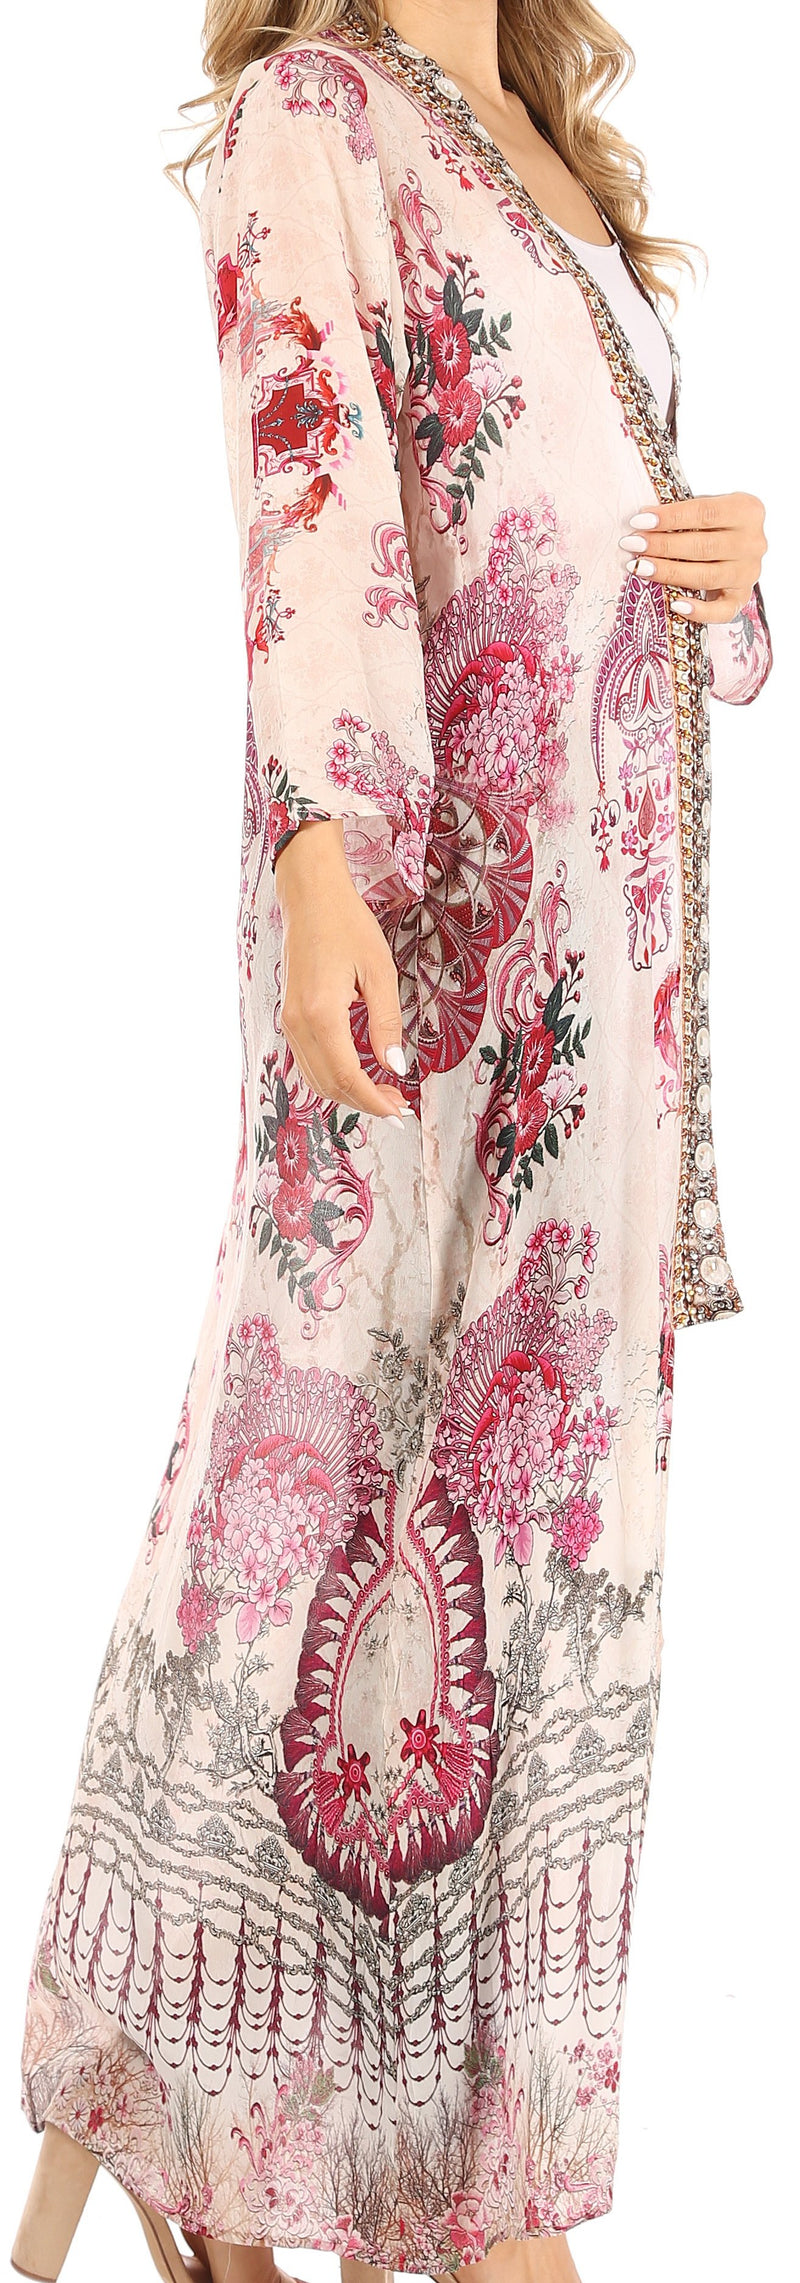 Sakkas Iona Women's Casual Boho Long Kimono Cardigan Open Front Floral Print Loose